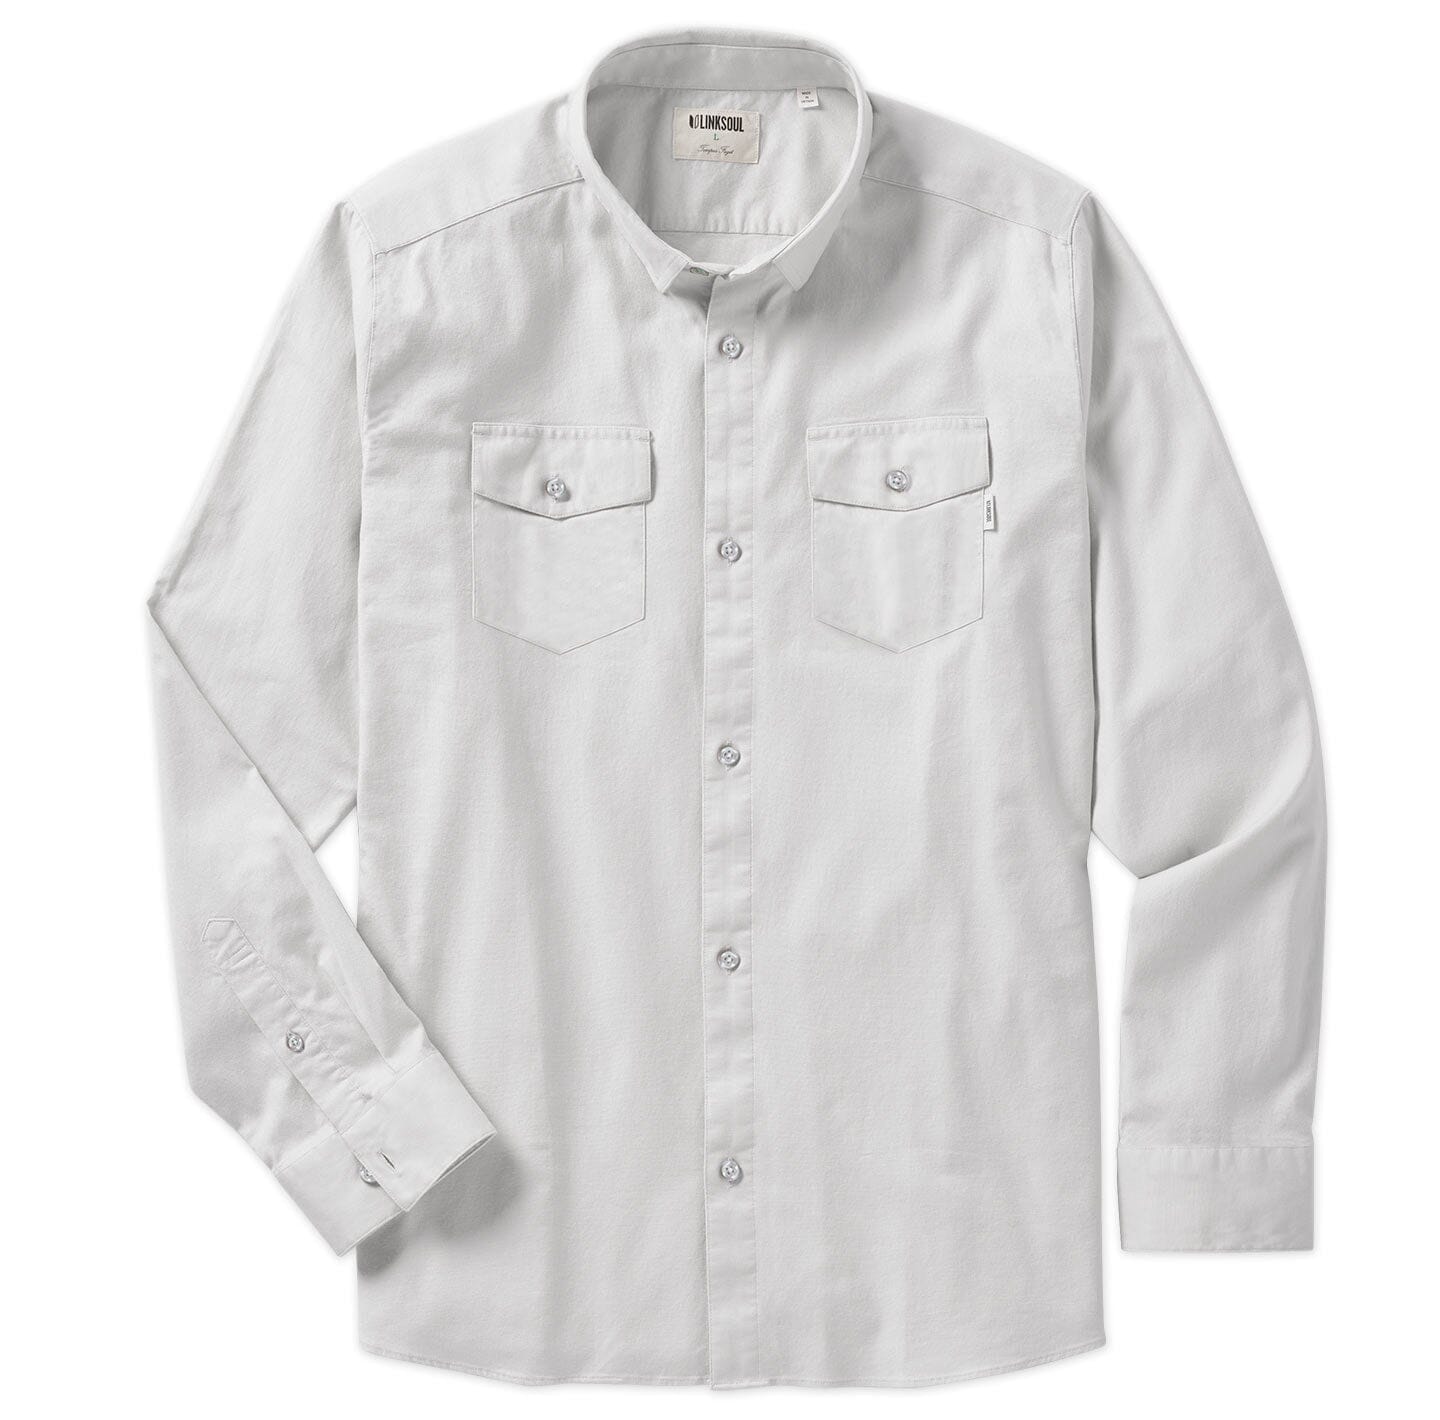 Shelter Lloyd Button Up Shirt - White